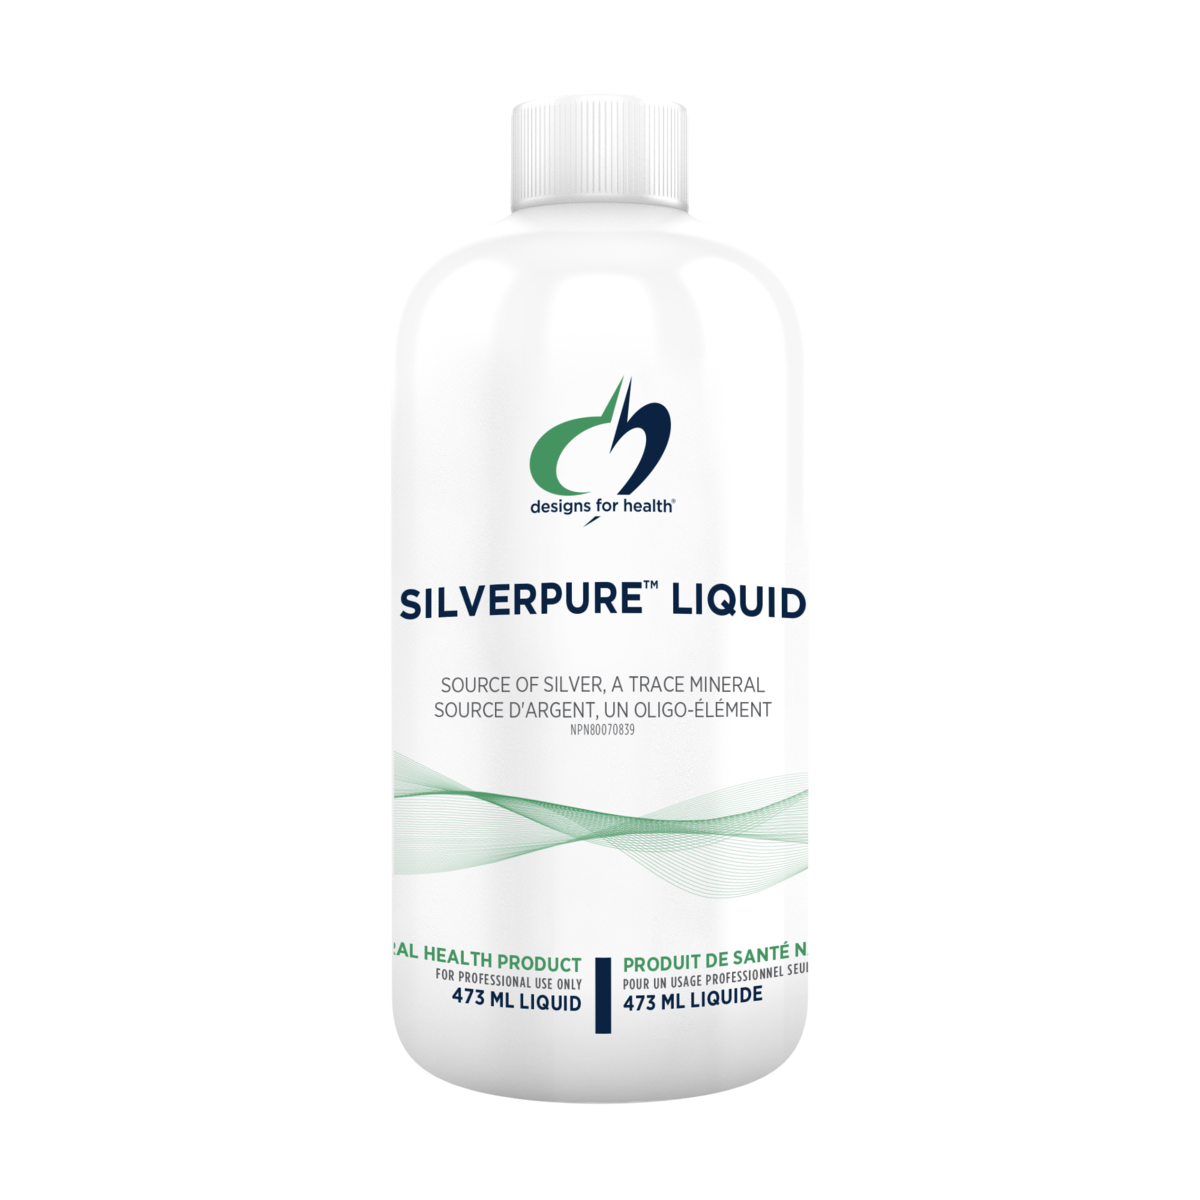 SilverPure Liquid